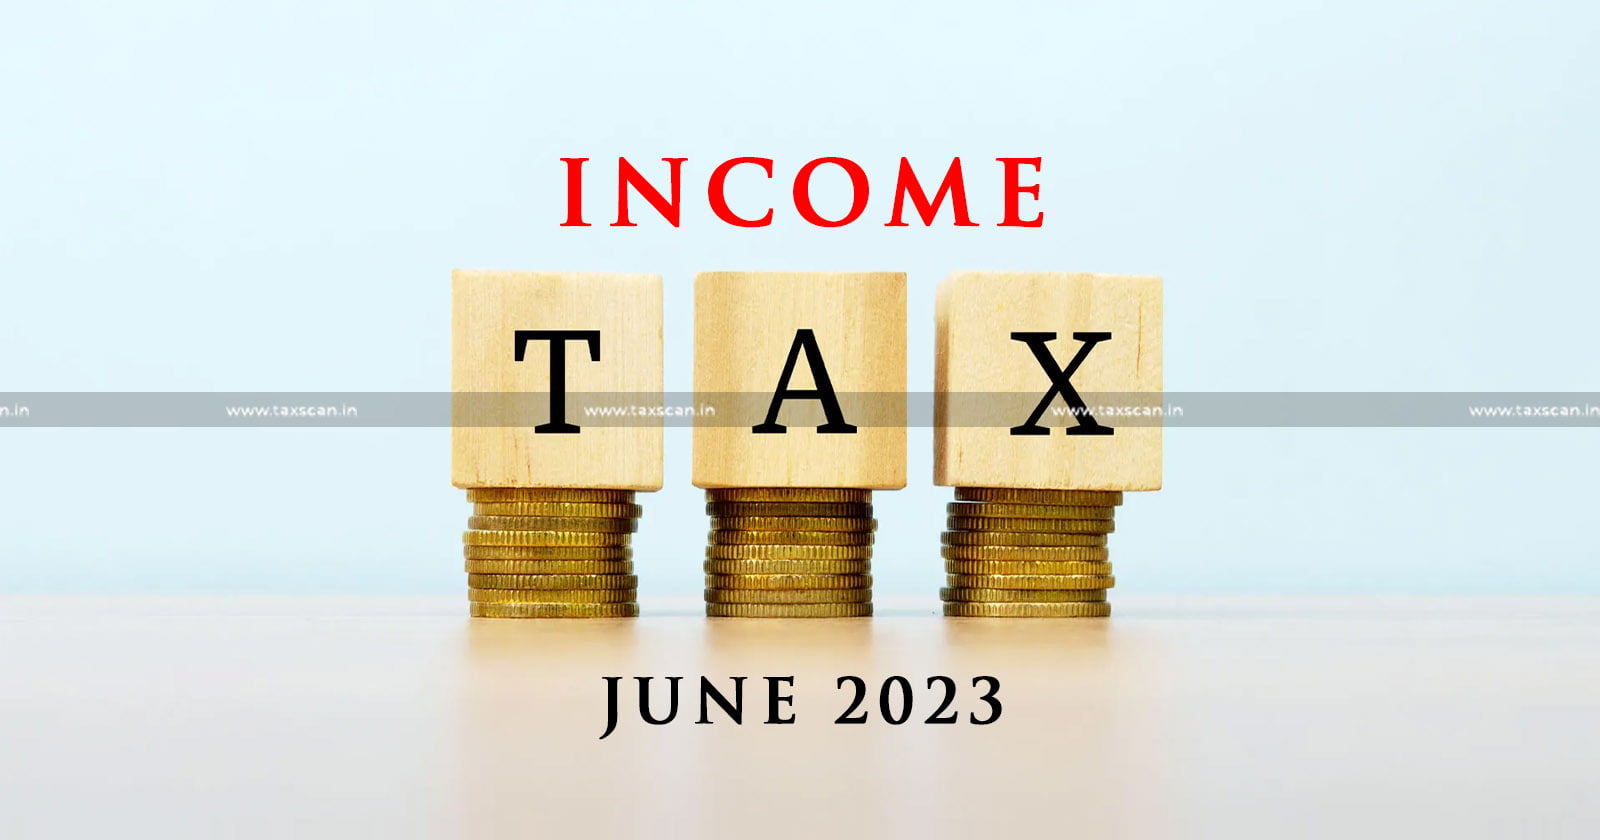 Income Tax Compliance Calendar for June 2023 - Income Tax Compliance - Income Tax - Income Tax Compliance Calendar - taxscan